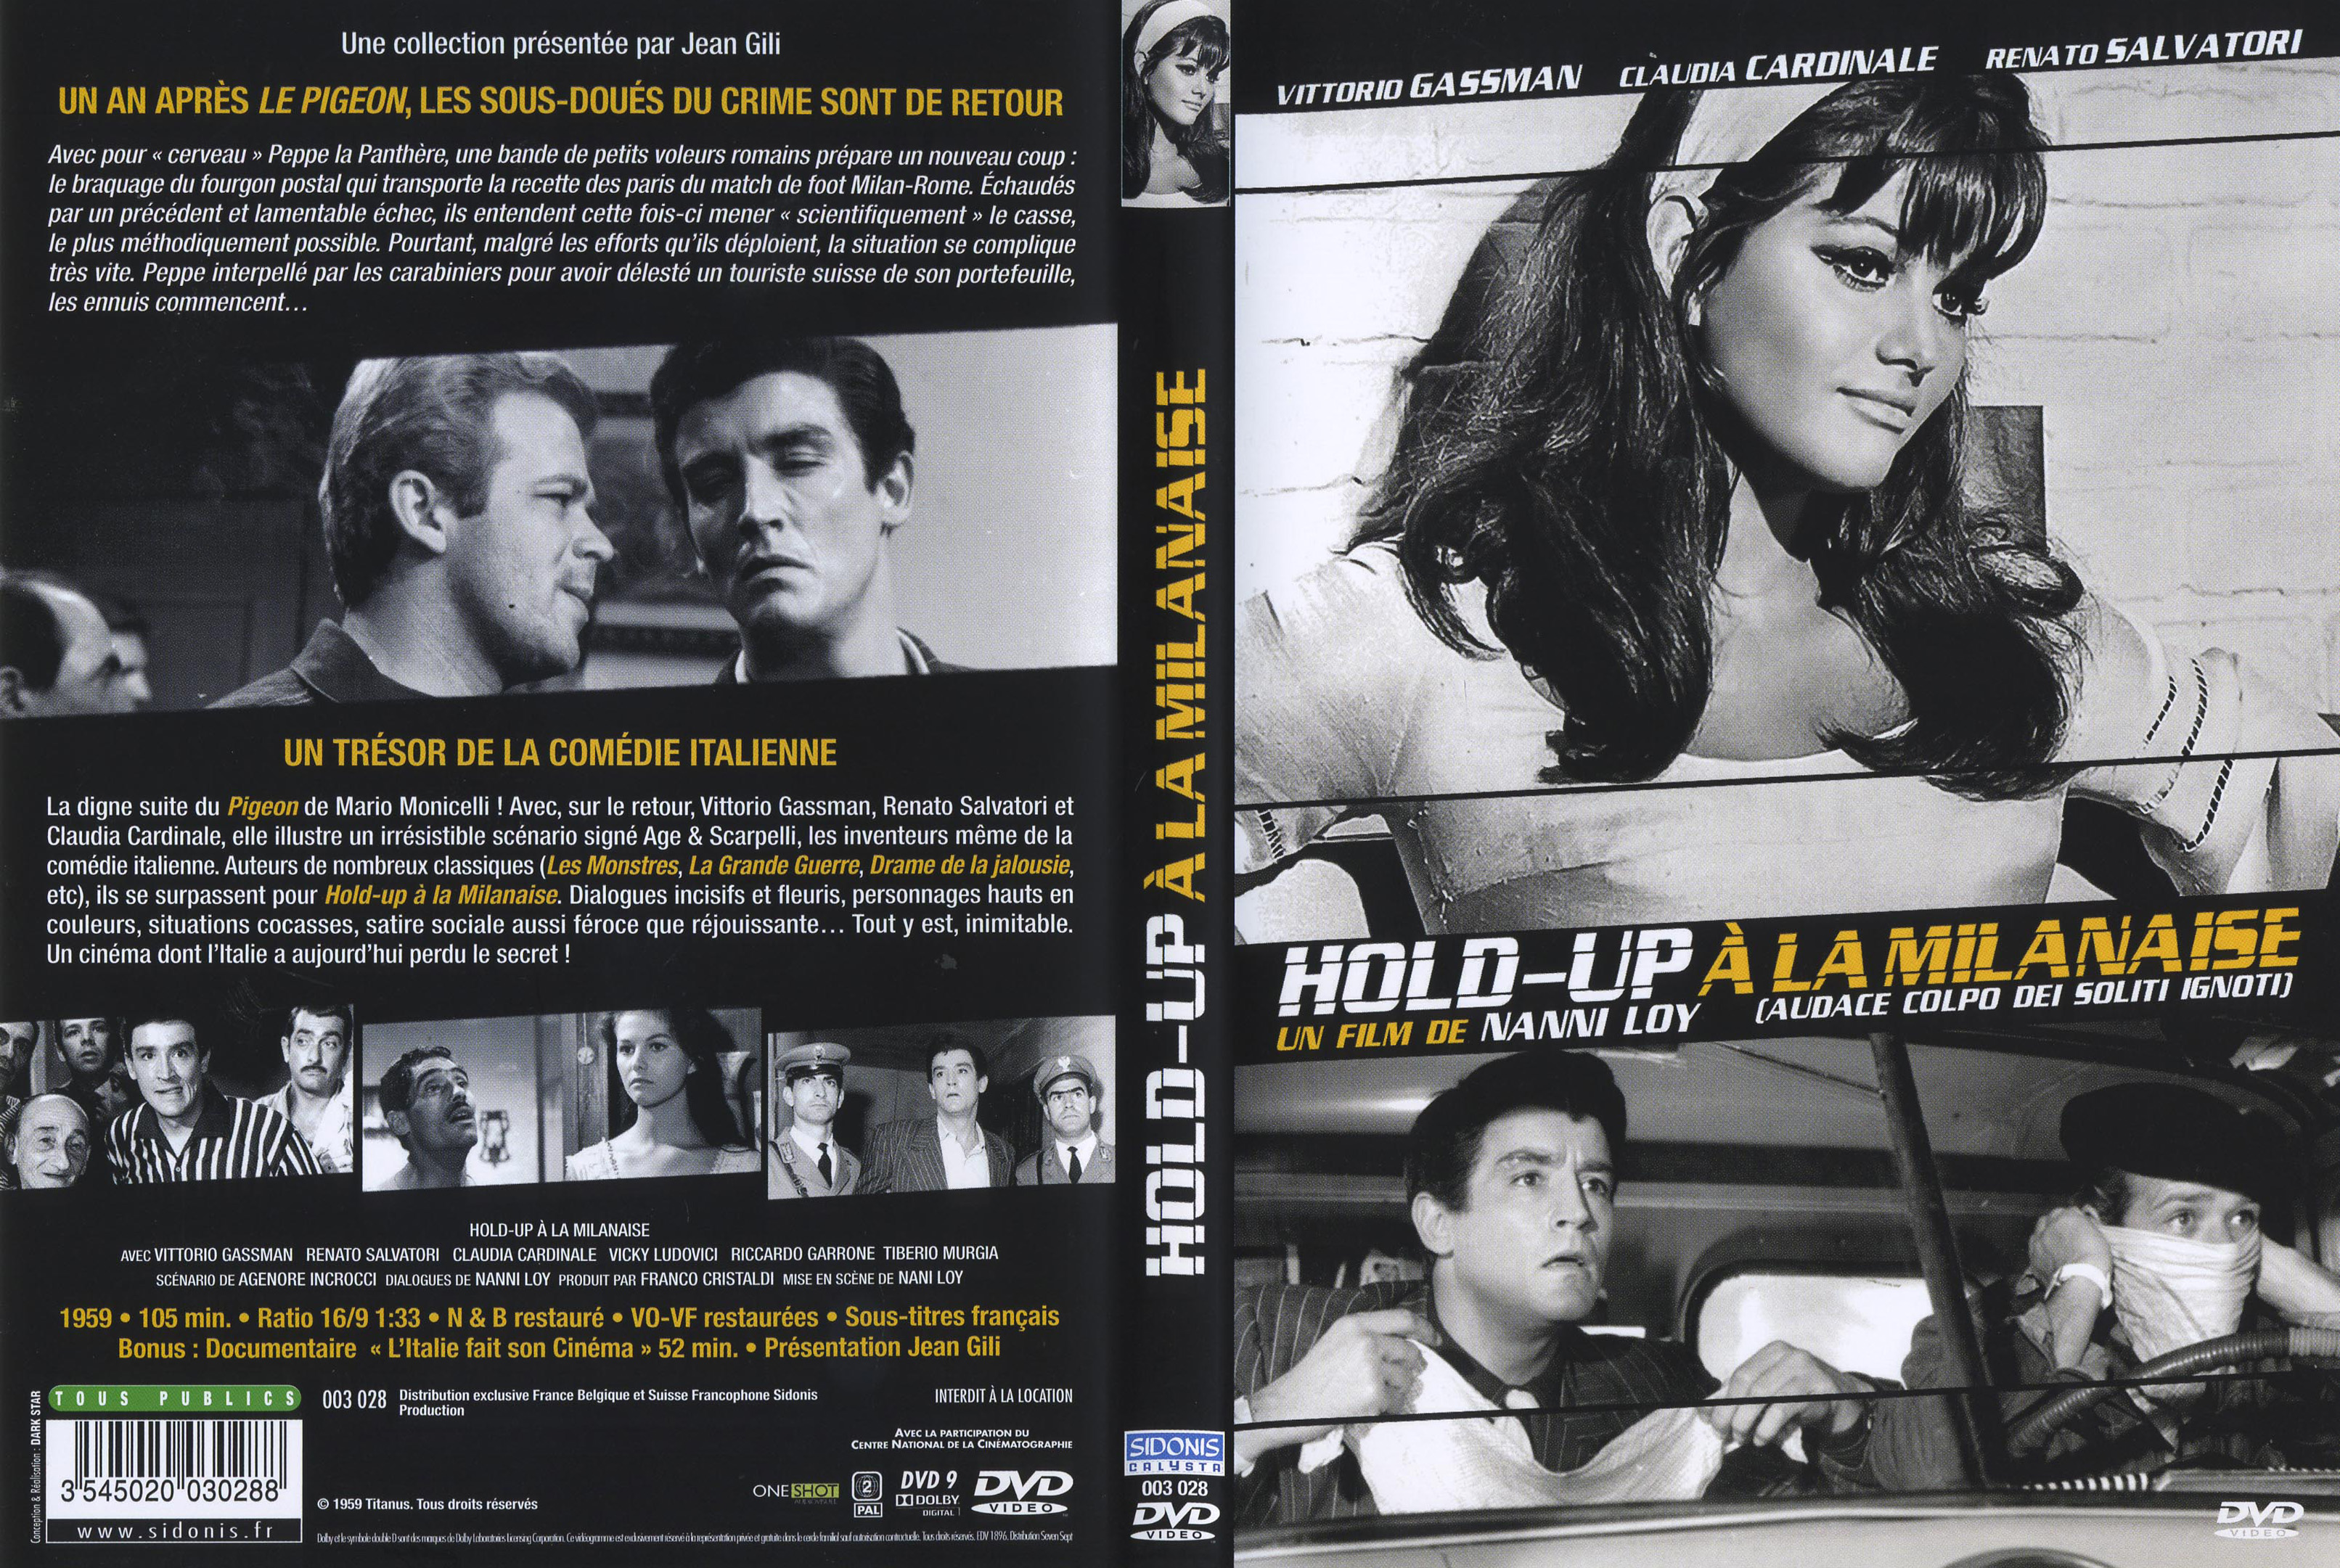 Jaquette DVD Hold up  la milanaise v2